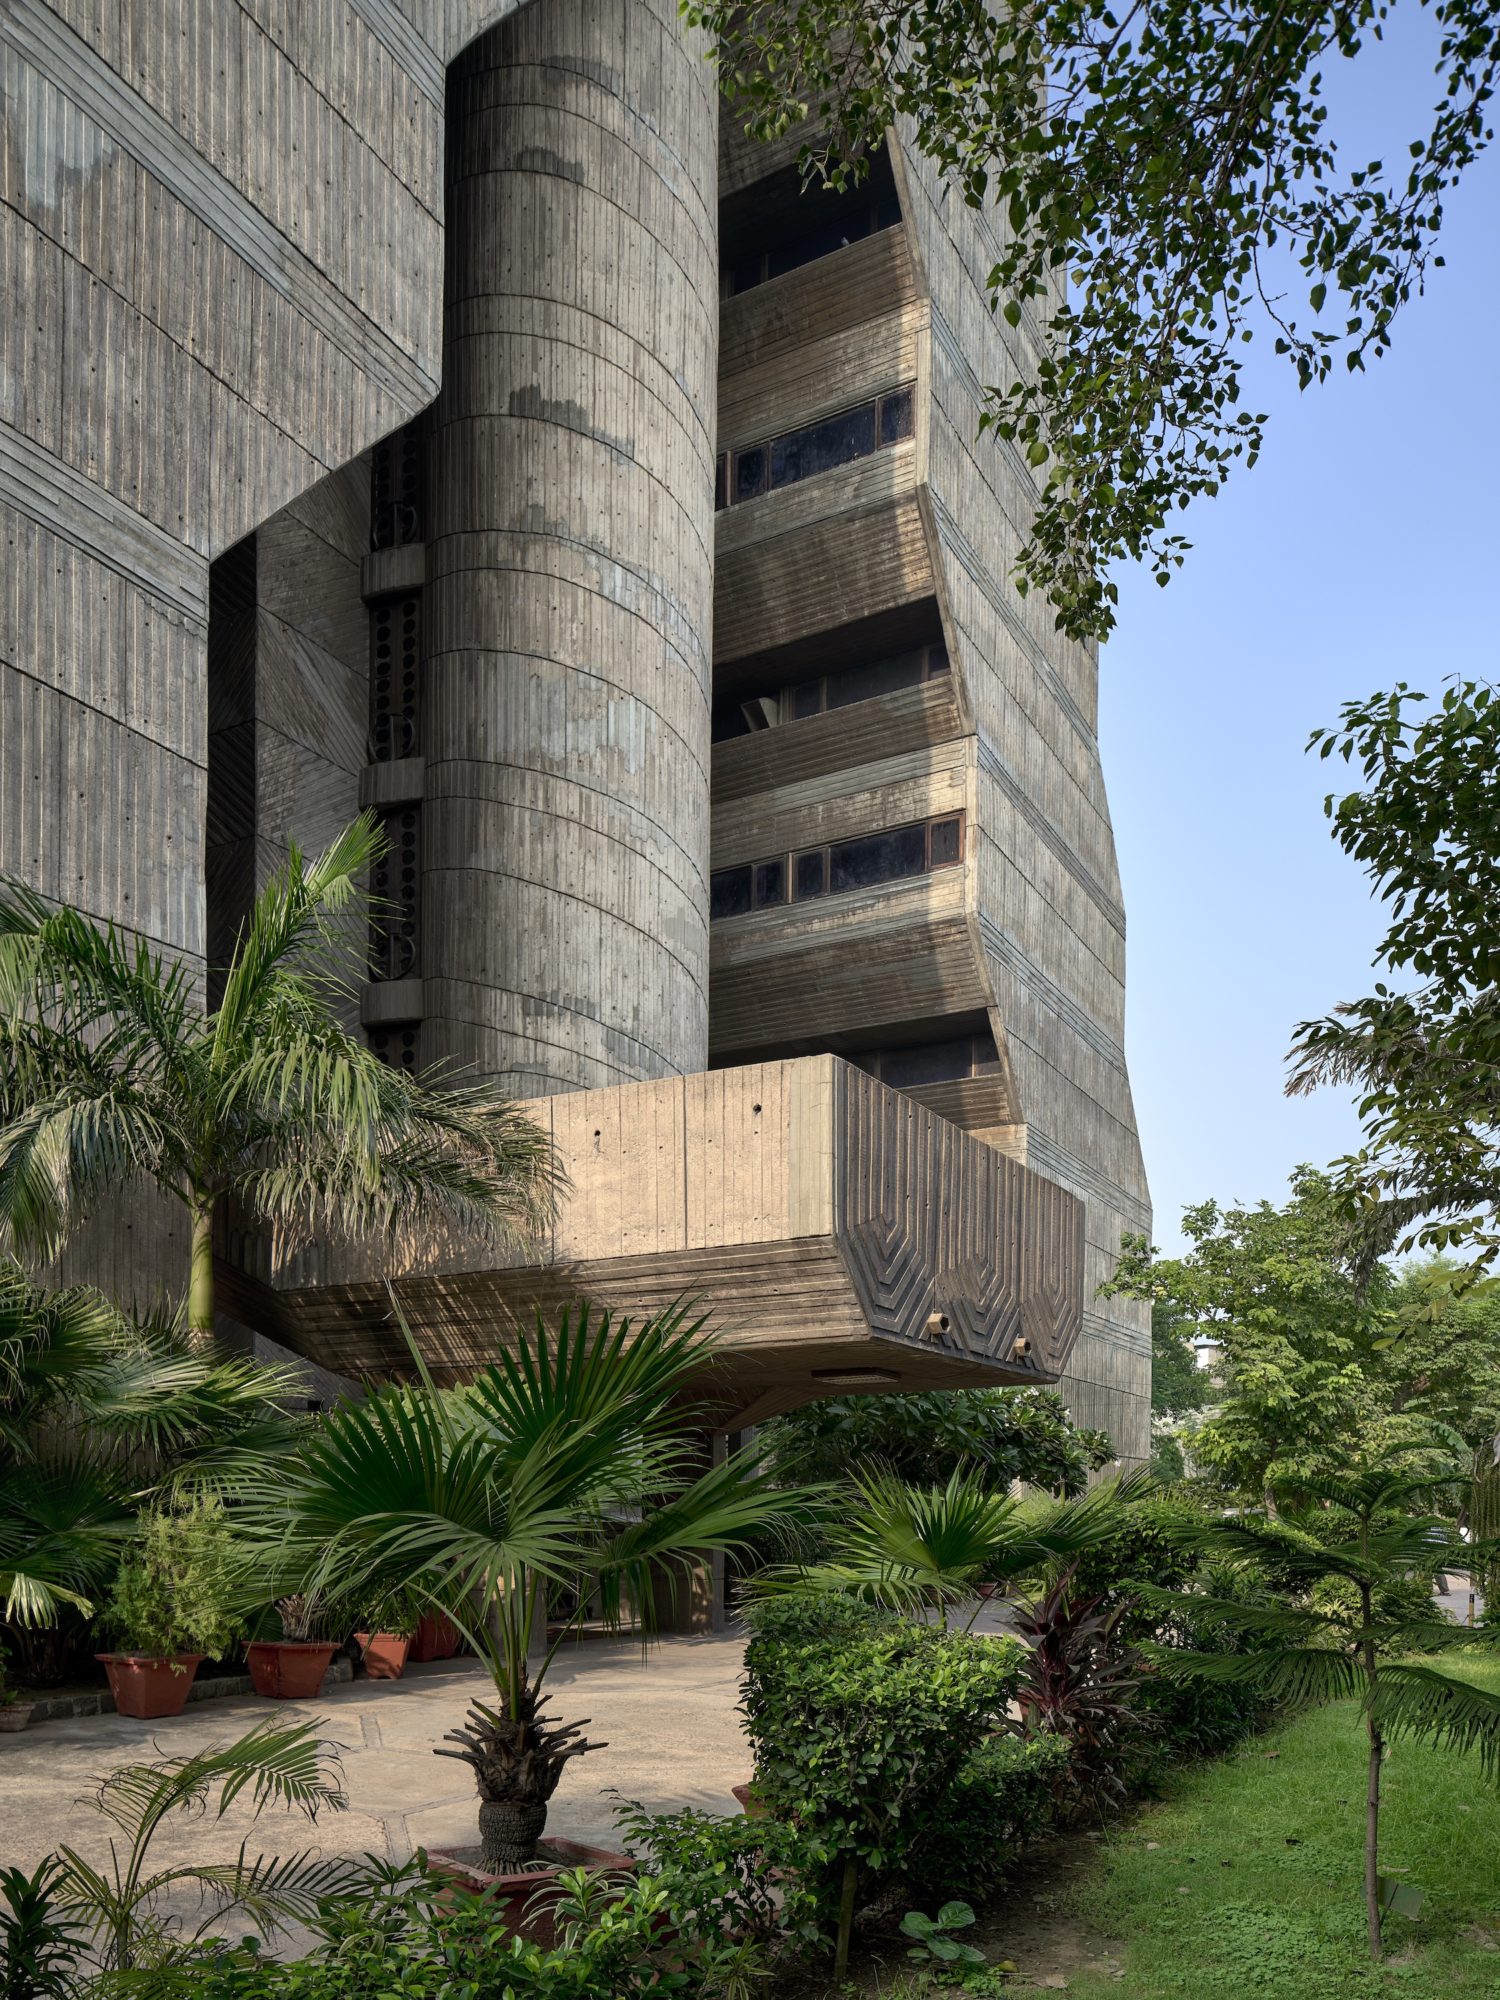 Kuldip Singh’s National Cooperative Development Corporation Office Building in New Delhi